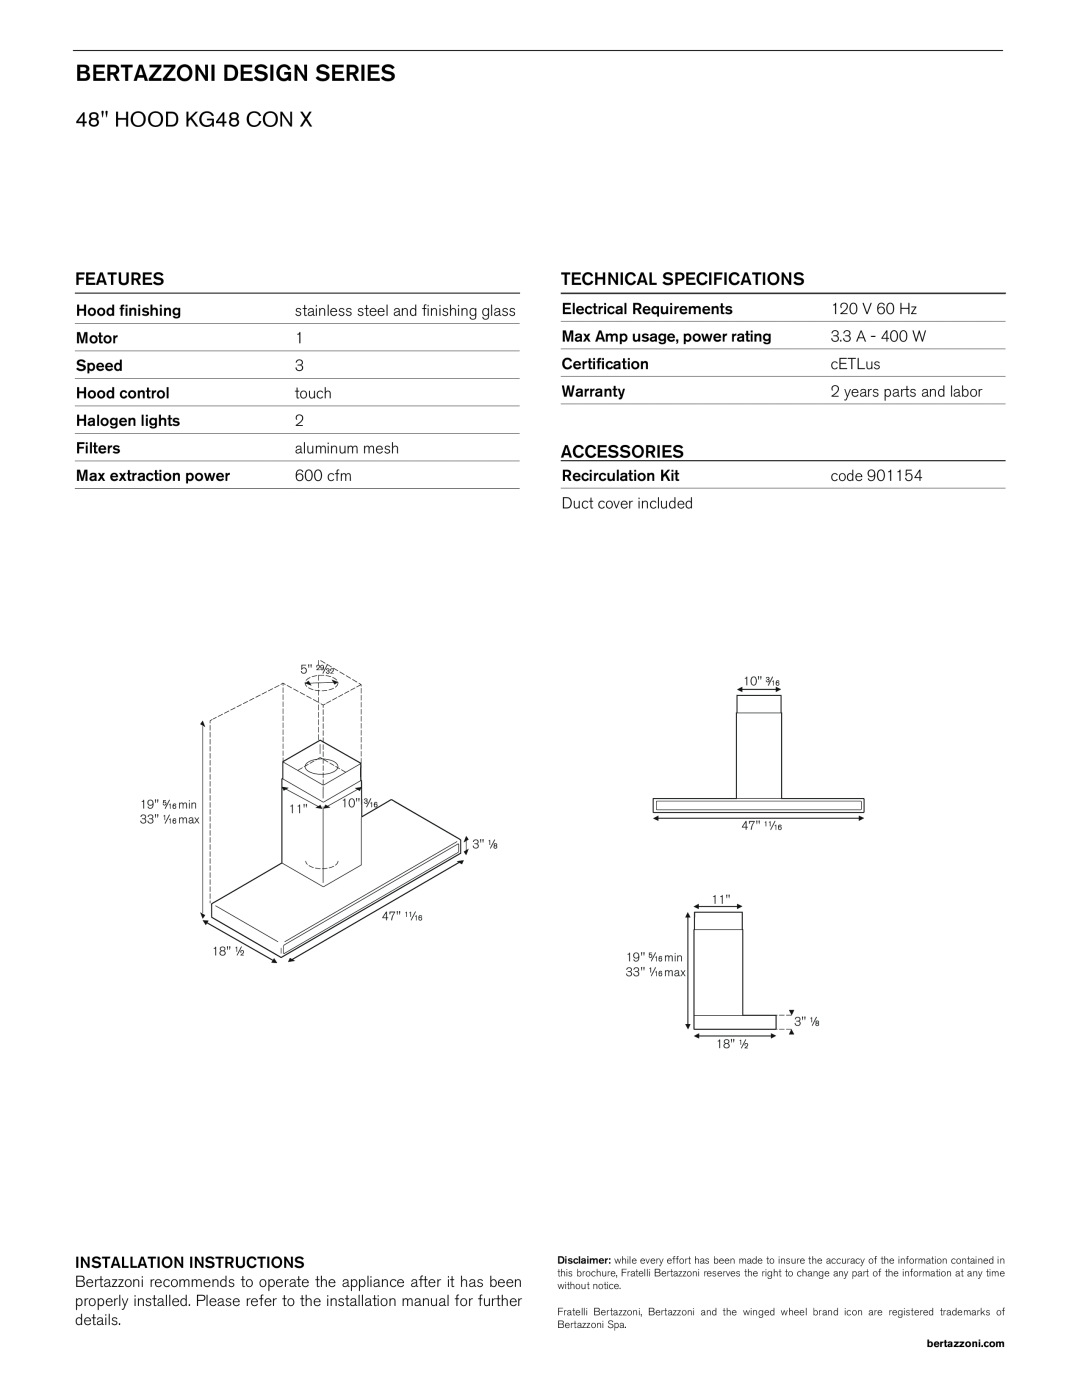 Bertazzoni KG48 CON X manual Bertazzoni Design Series, HOOD KG48 CON, Features, Technical Specifications, Accessories 